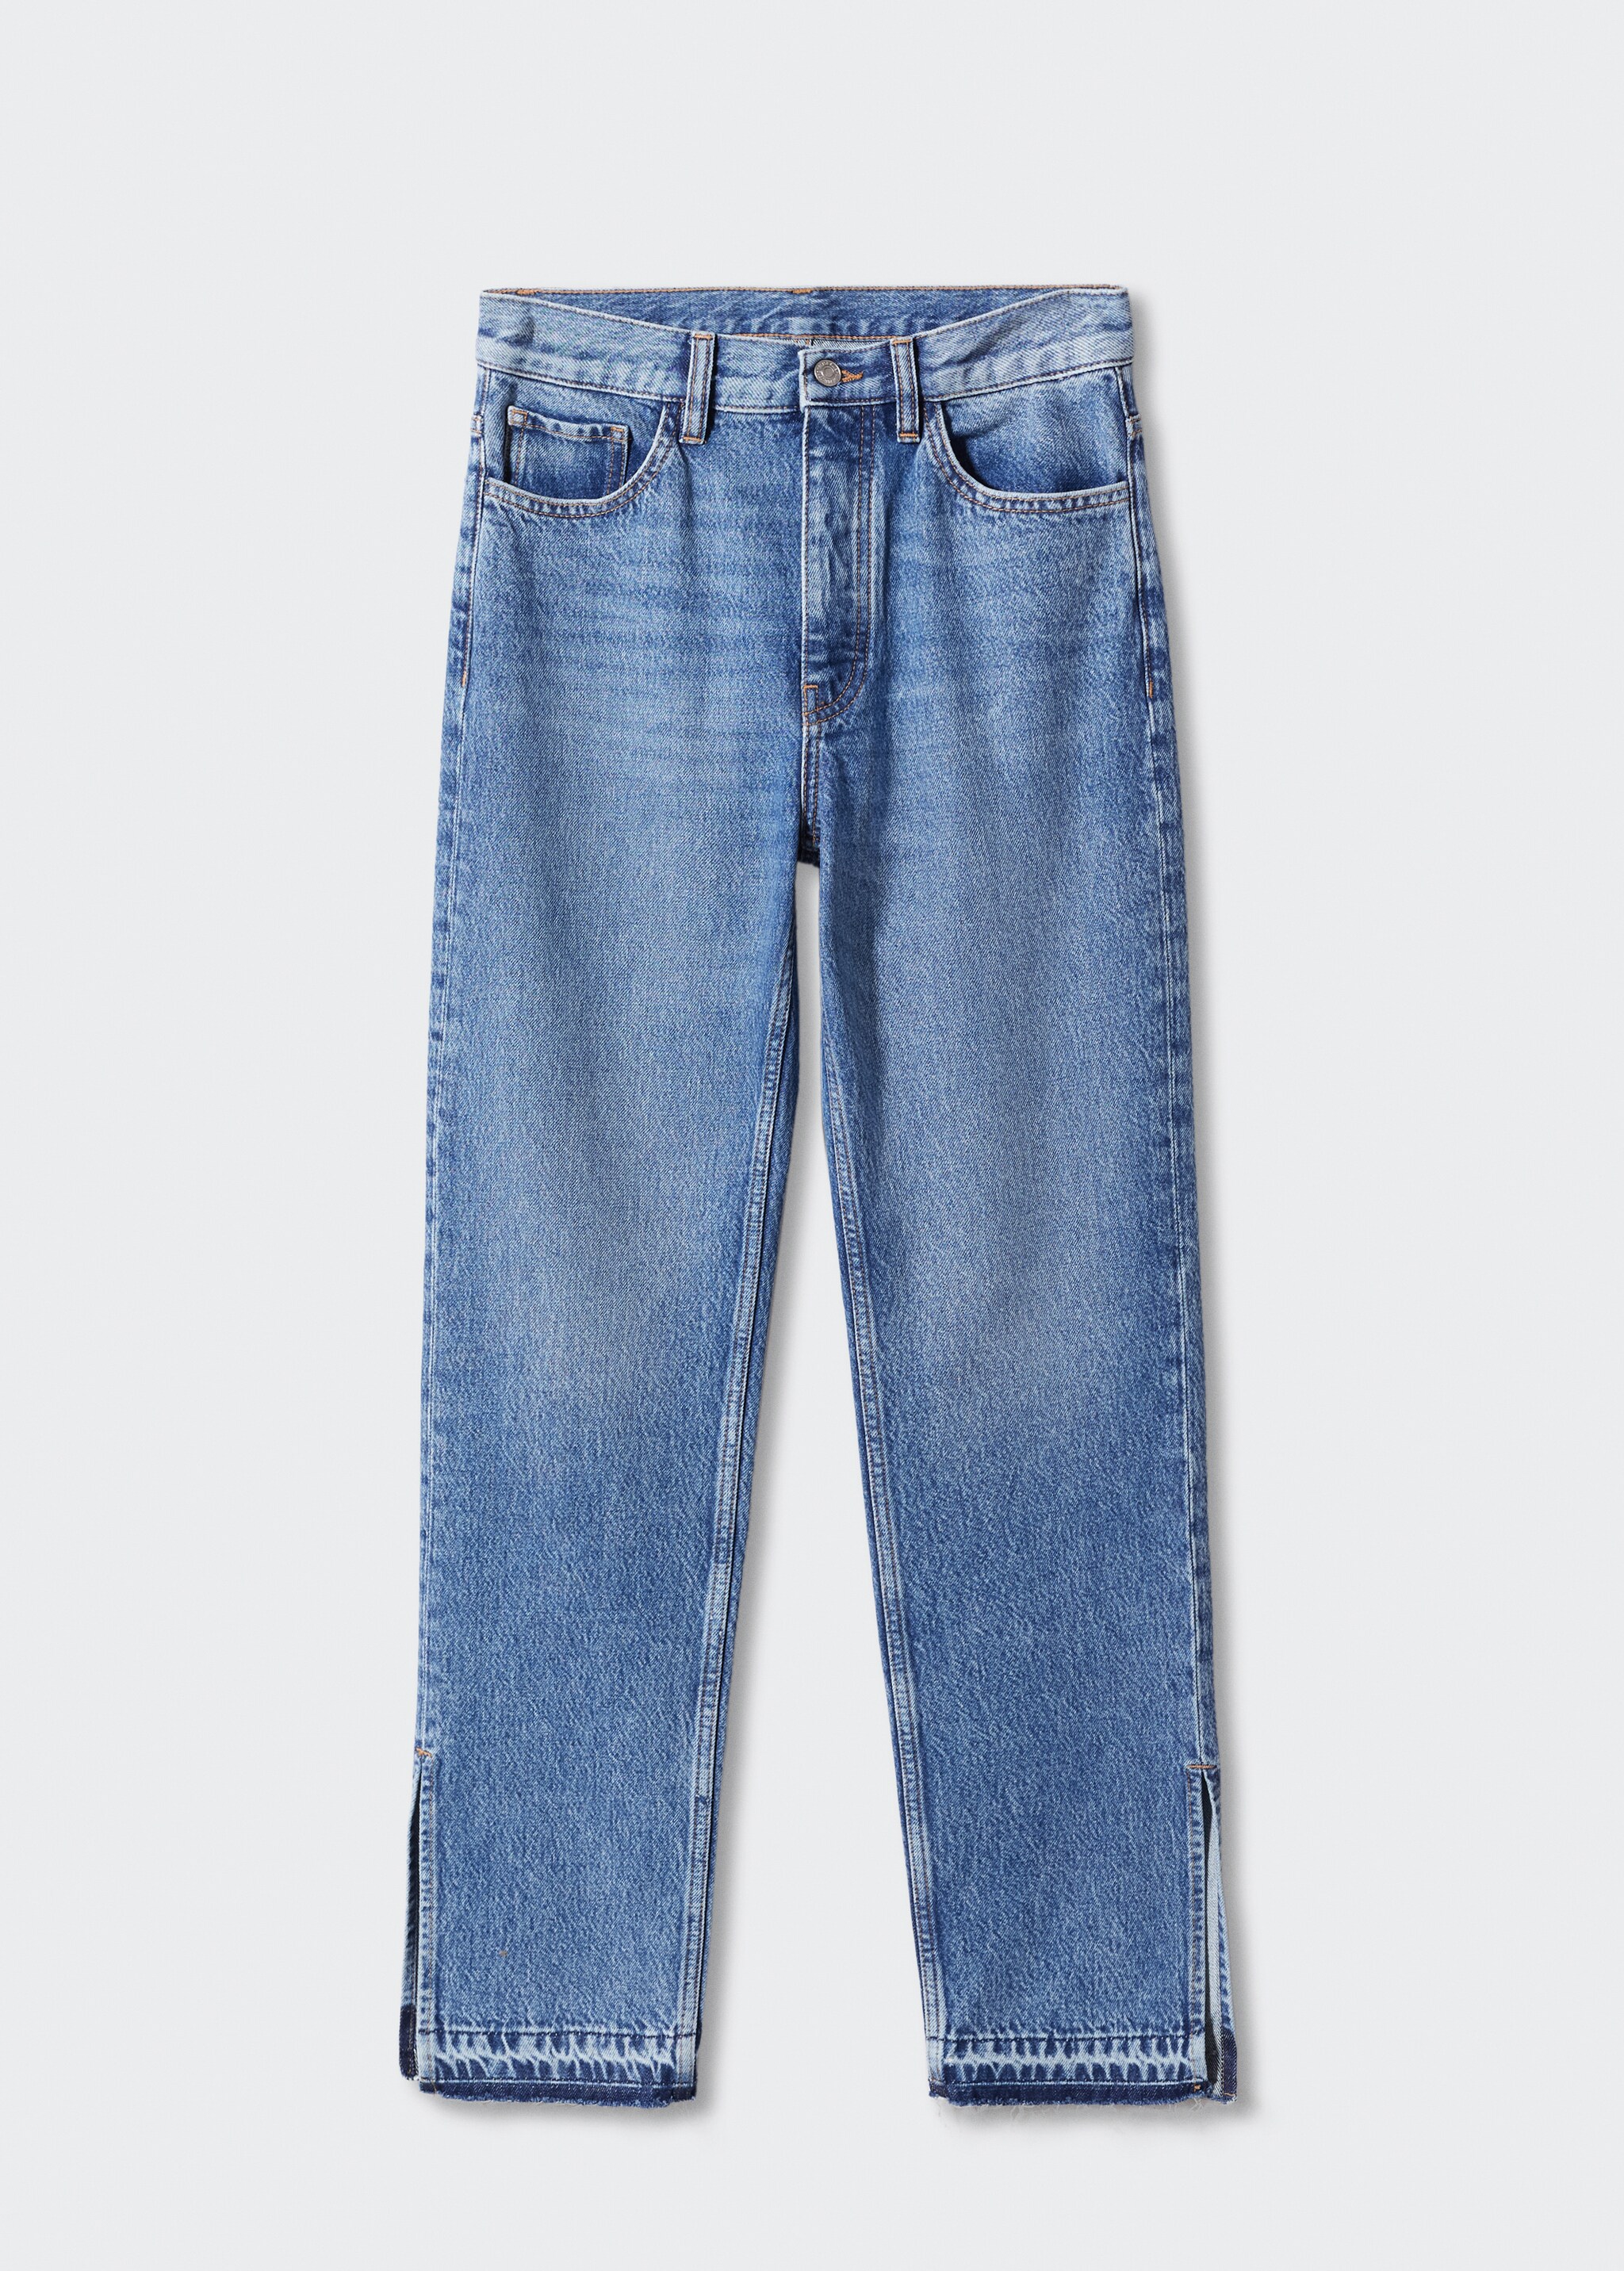 Jeans rectos tiro alto aberturas - Artículo sin modelo